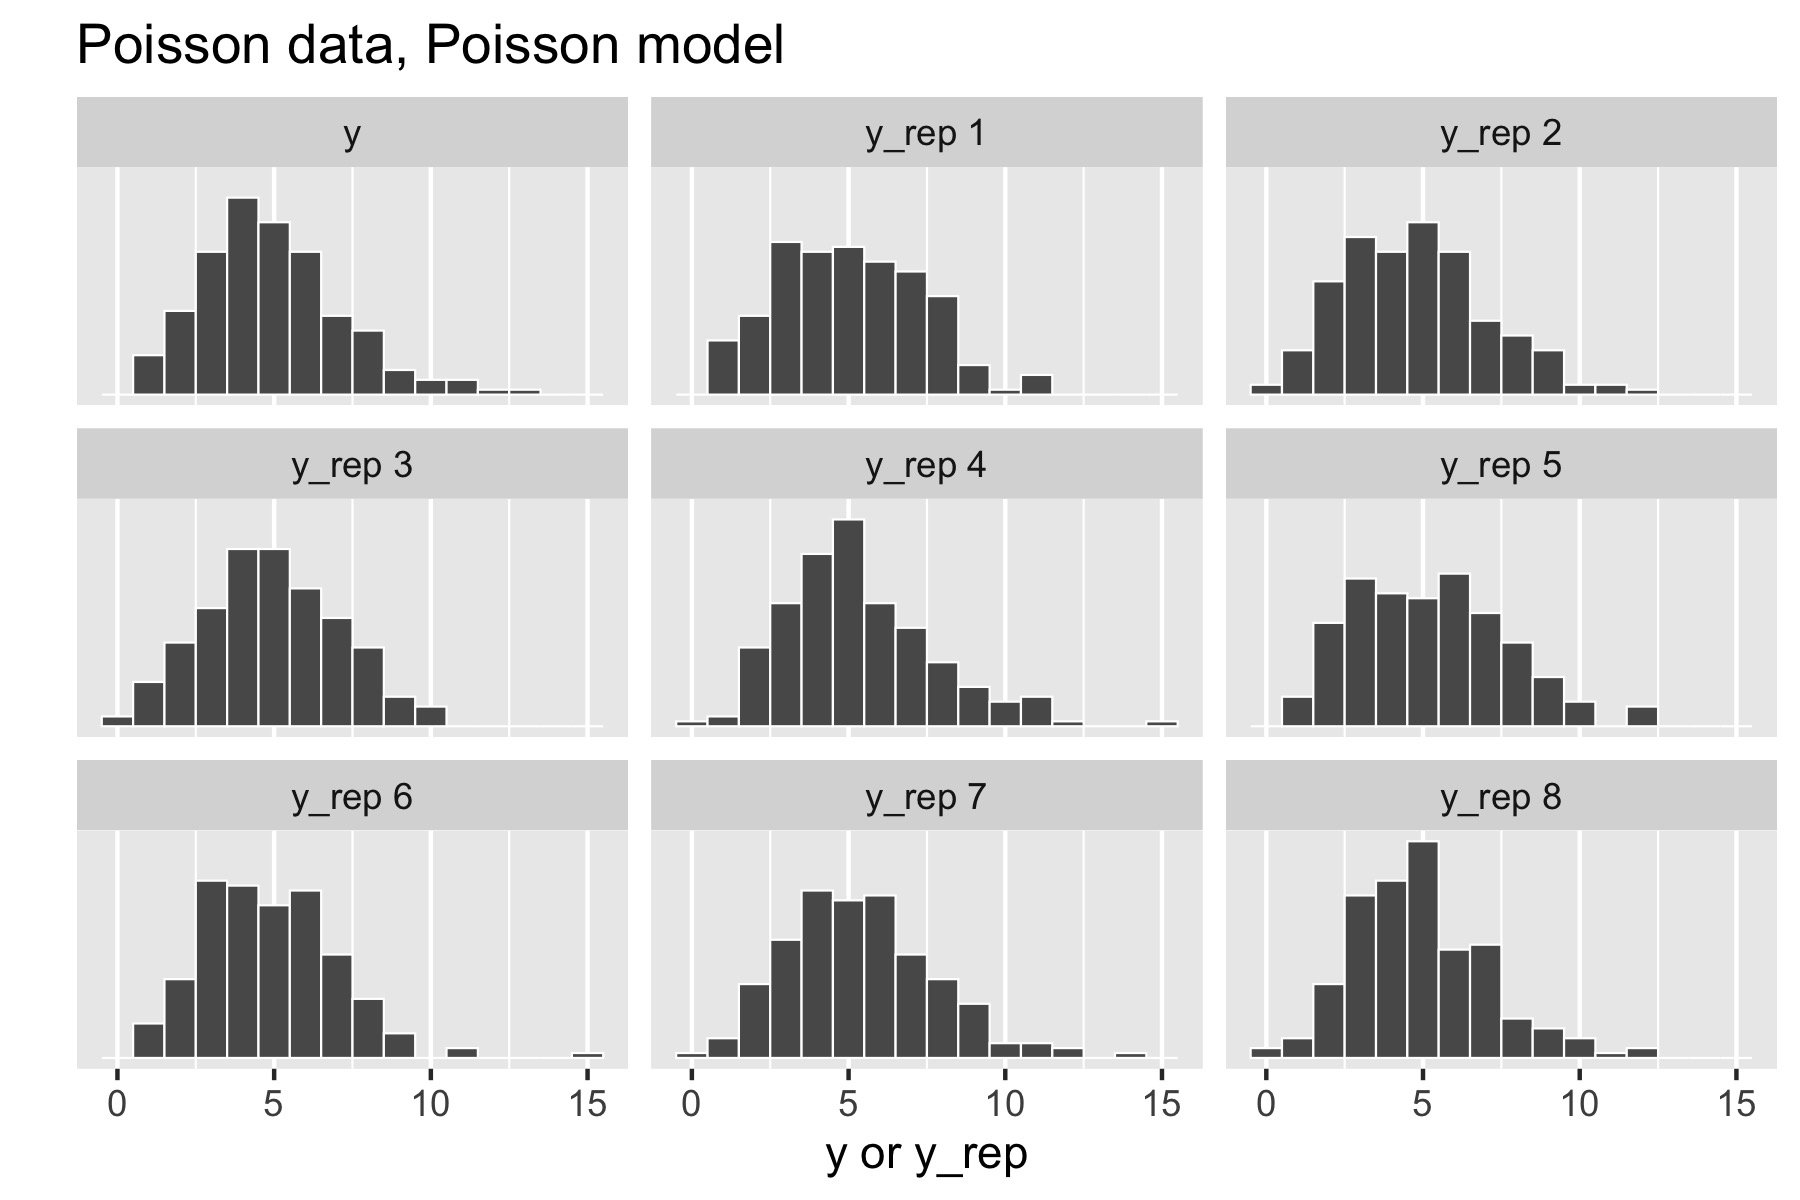 Posterior predictive checks for Poisson data generating process and Poisson model.